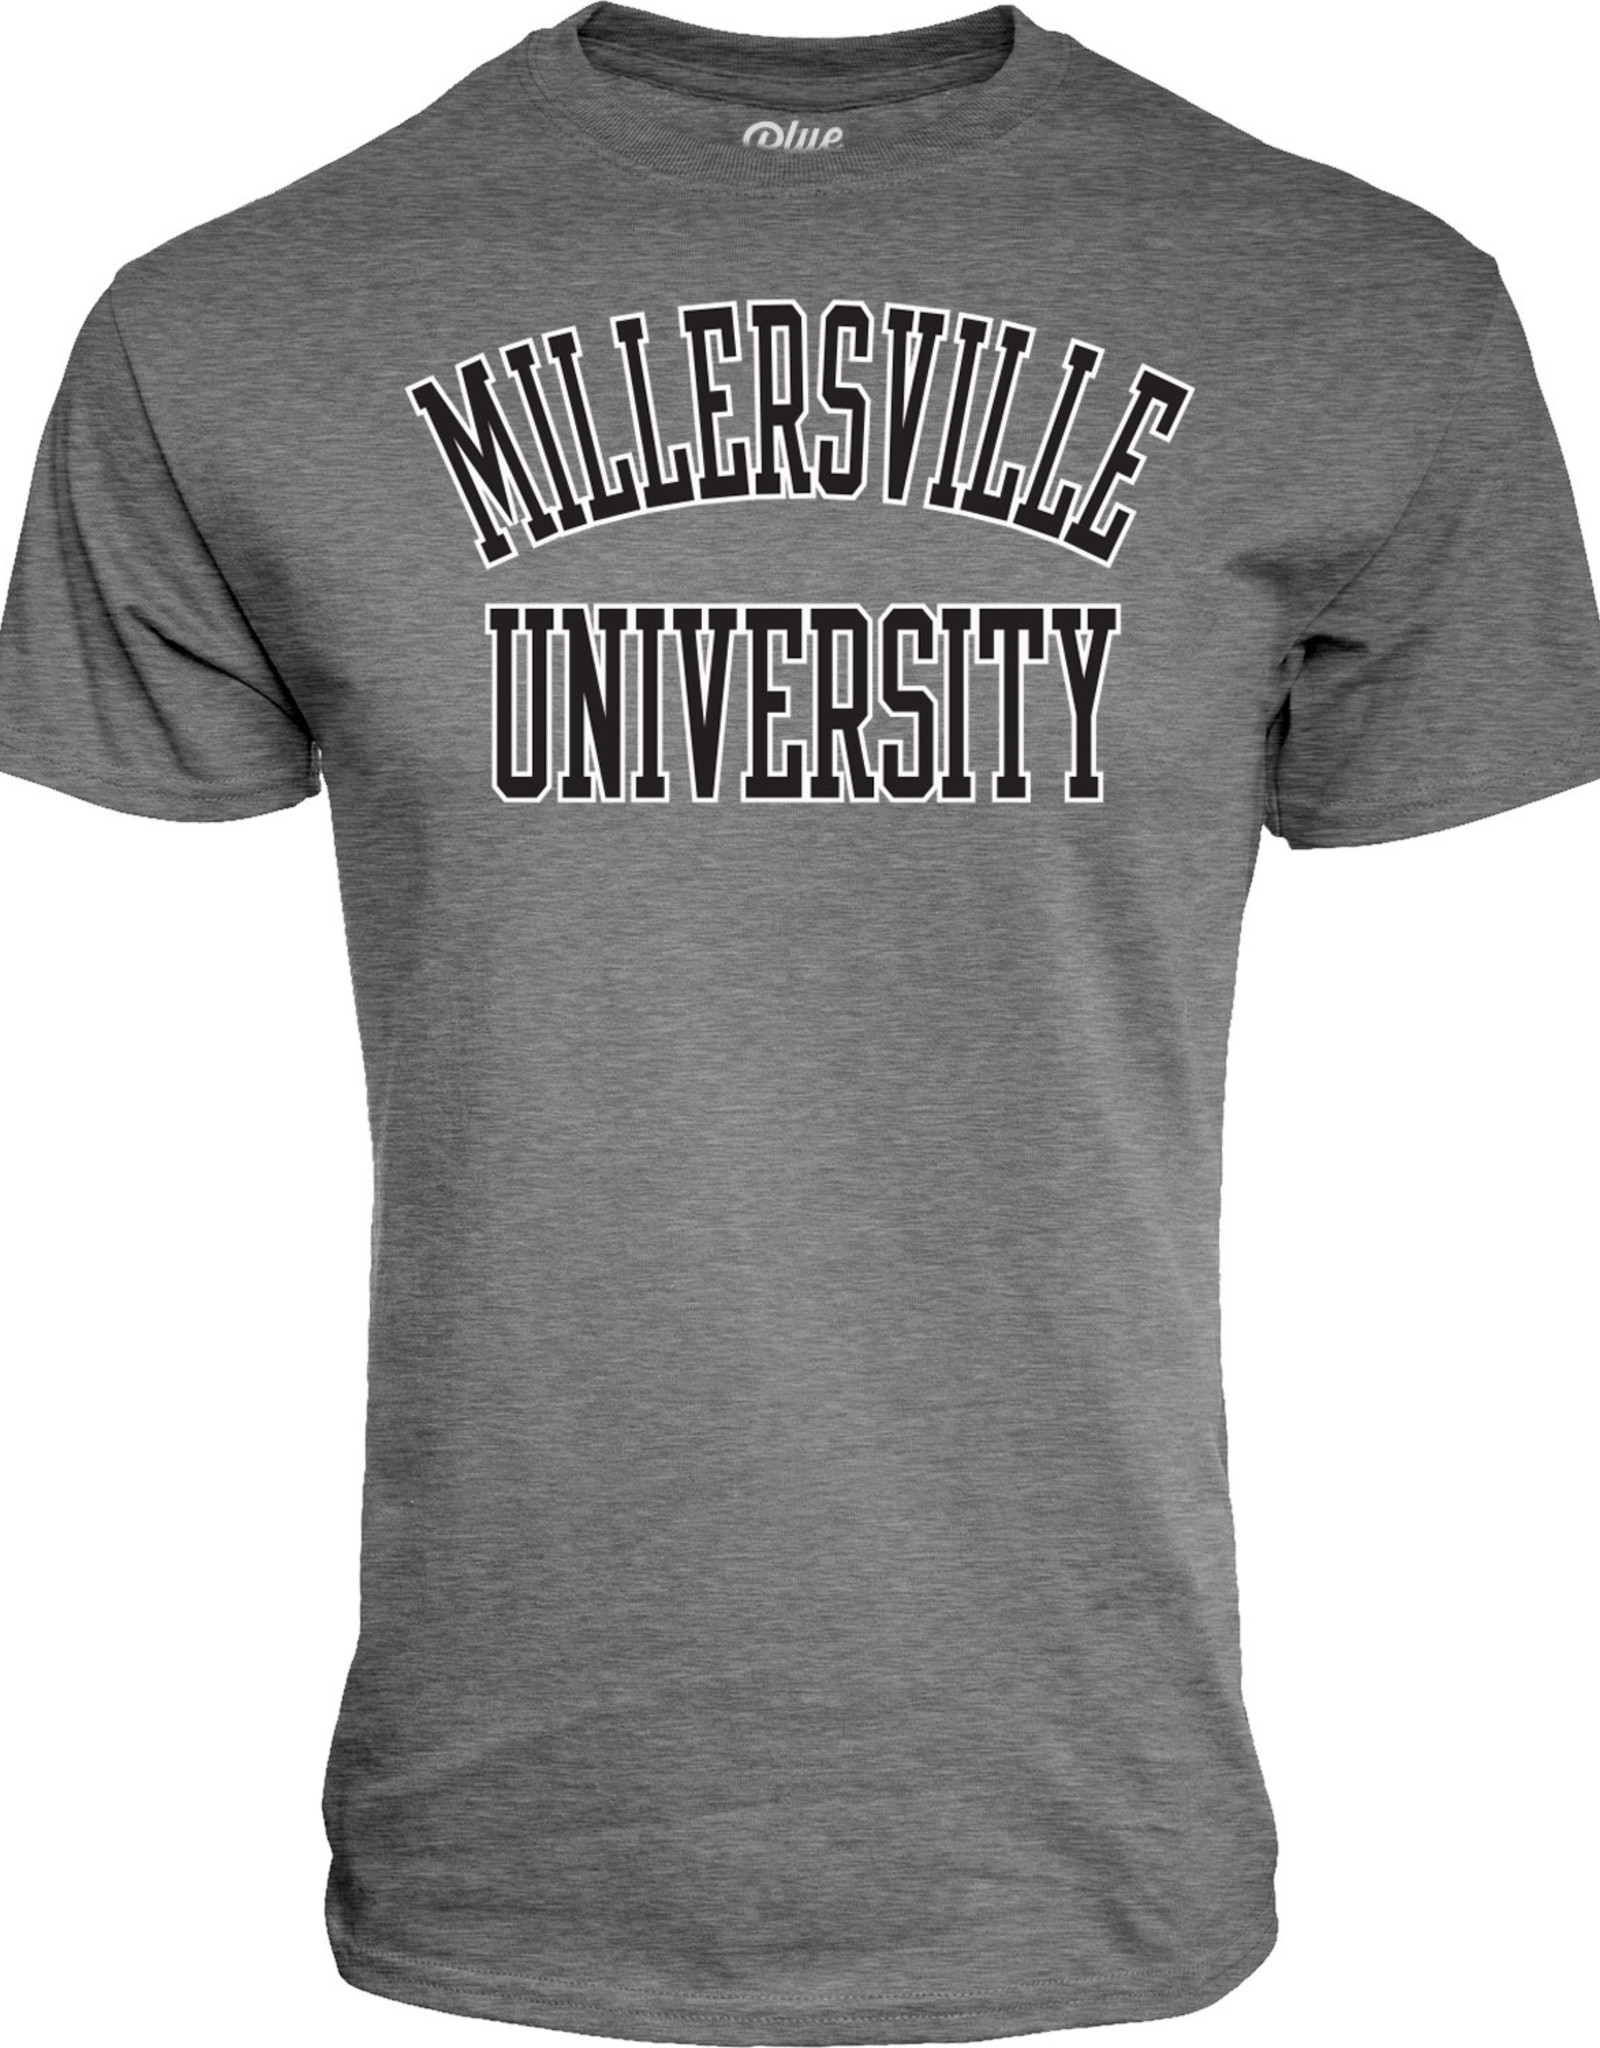 Graphite Millersville University Tee